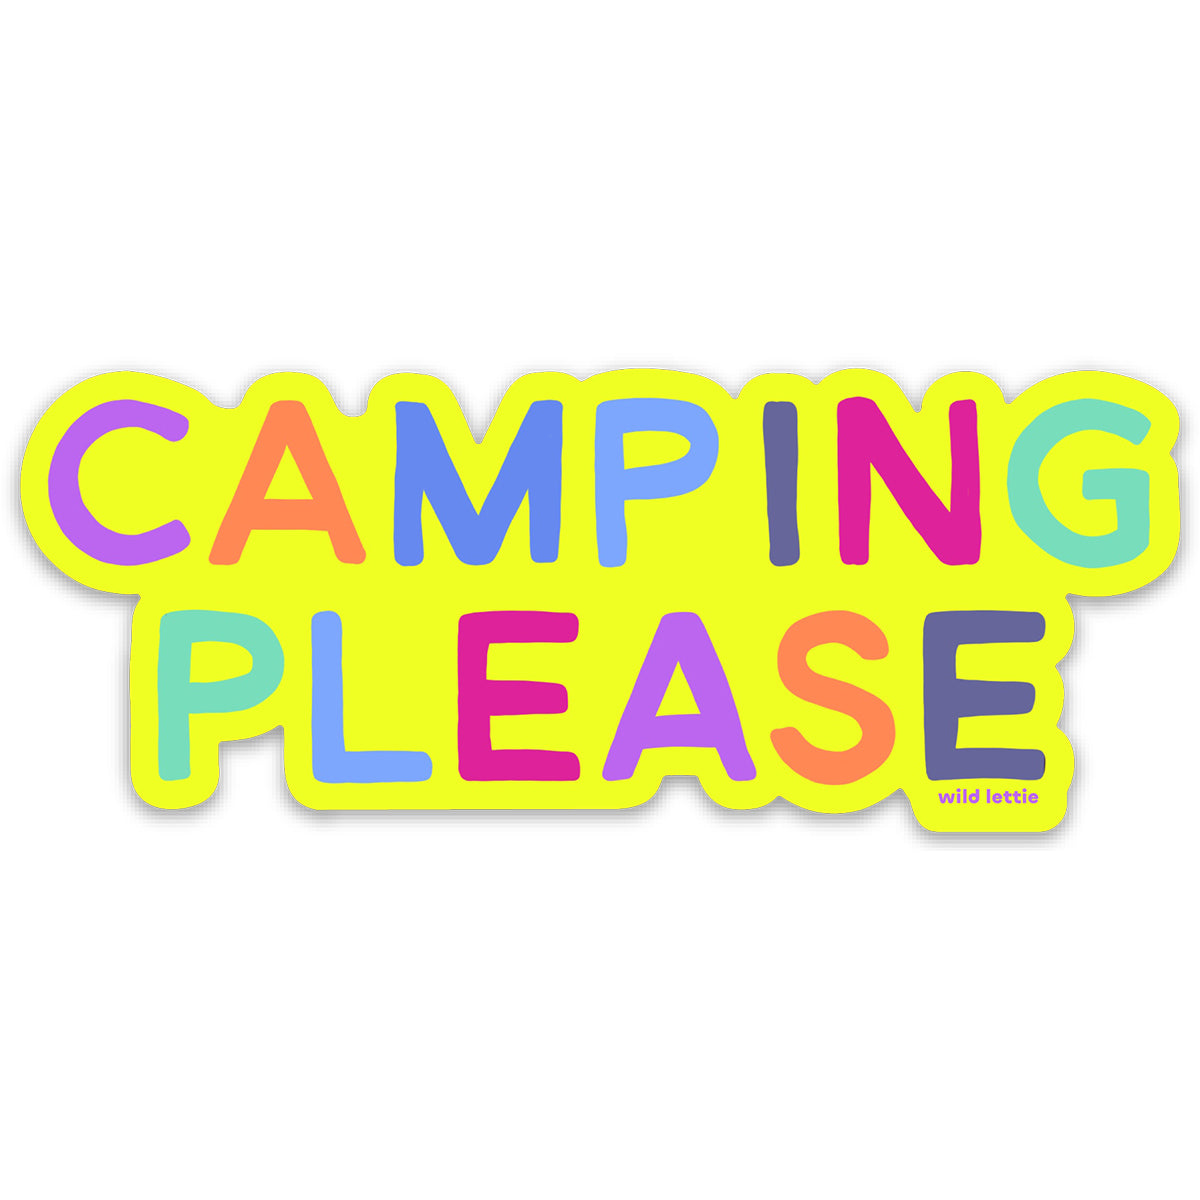 Camping Please Sticker